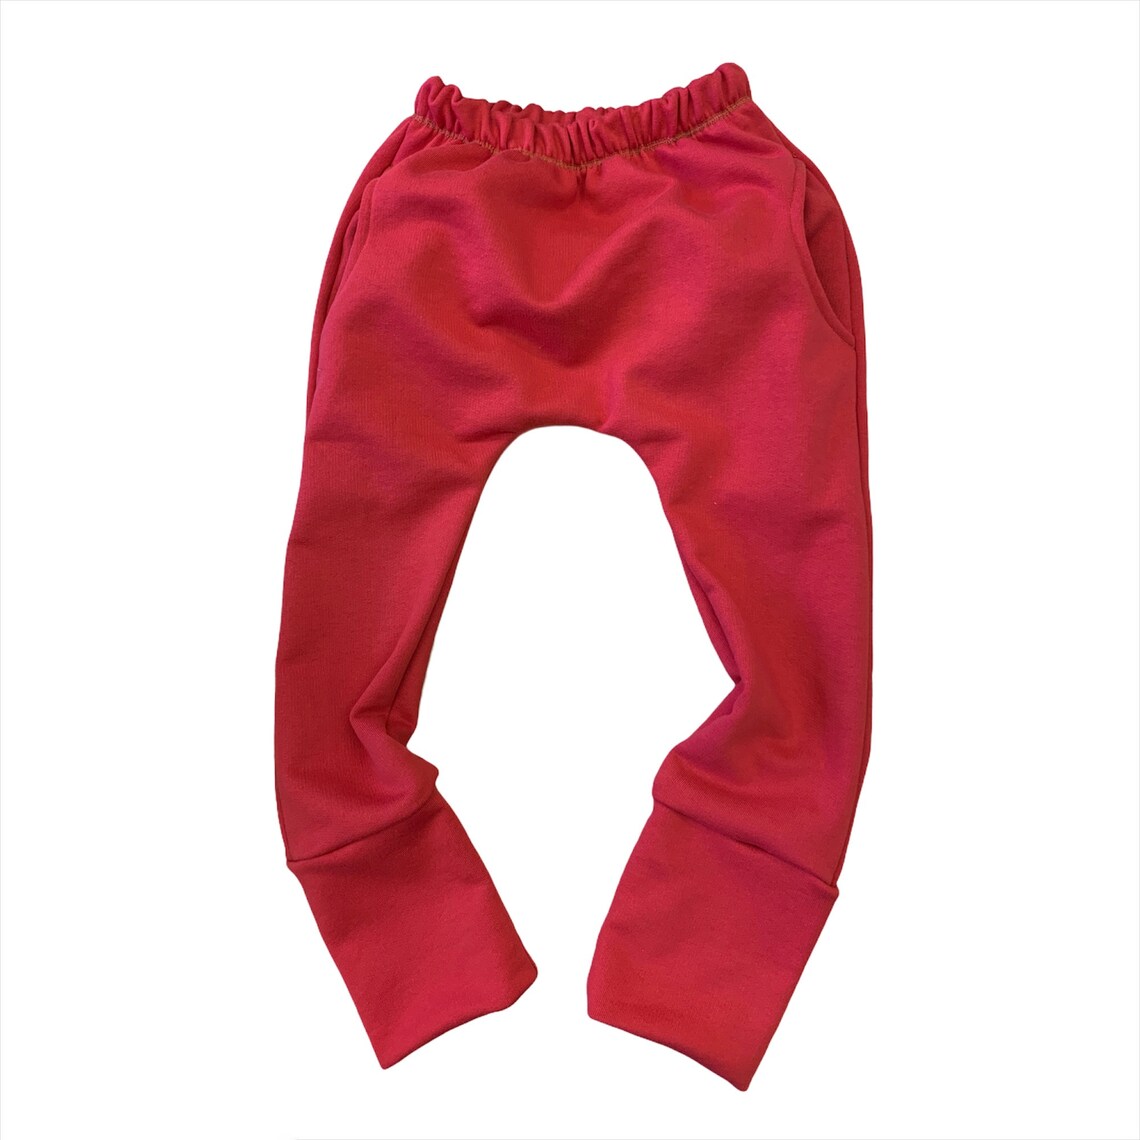 Red Boy Pants Kids Elastic Waistband Pants Unisex Cotton - Etsy